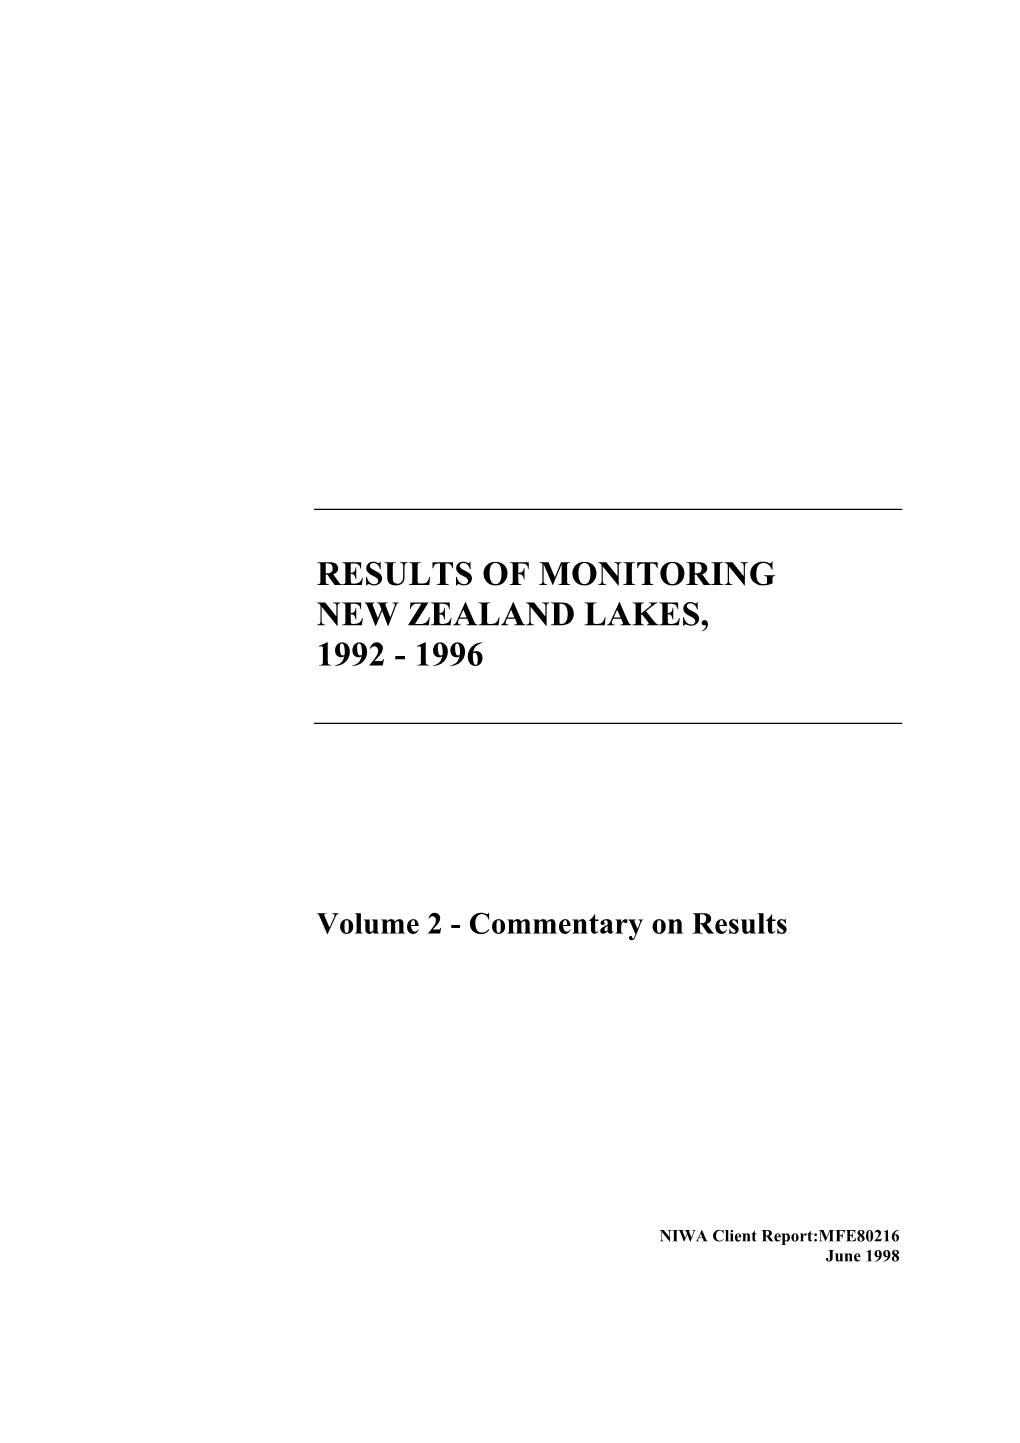 Results of Monitoring New Zealand Lakes, 1992 - 1996